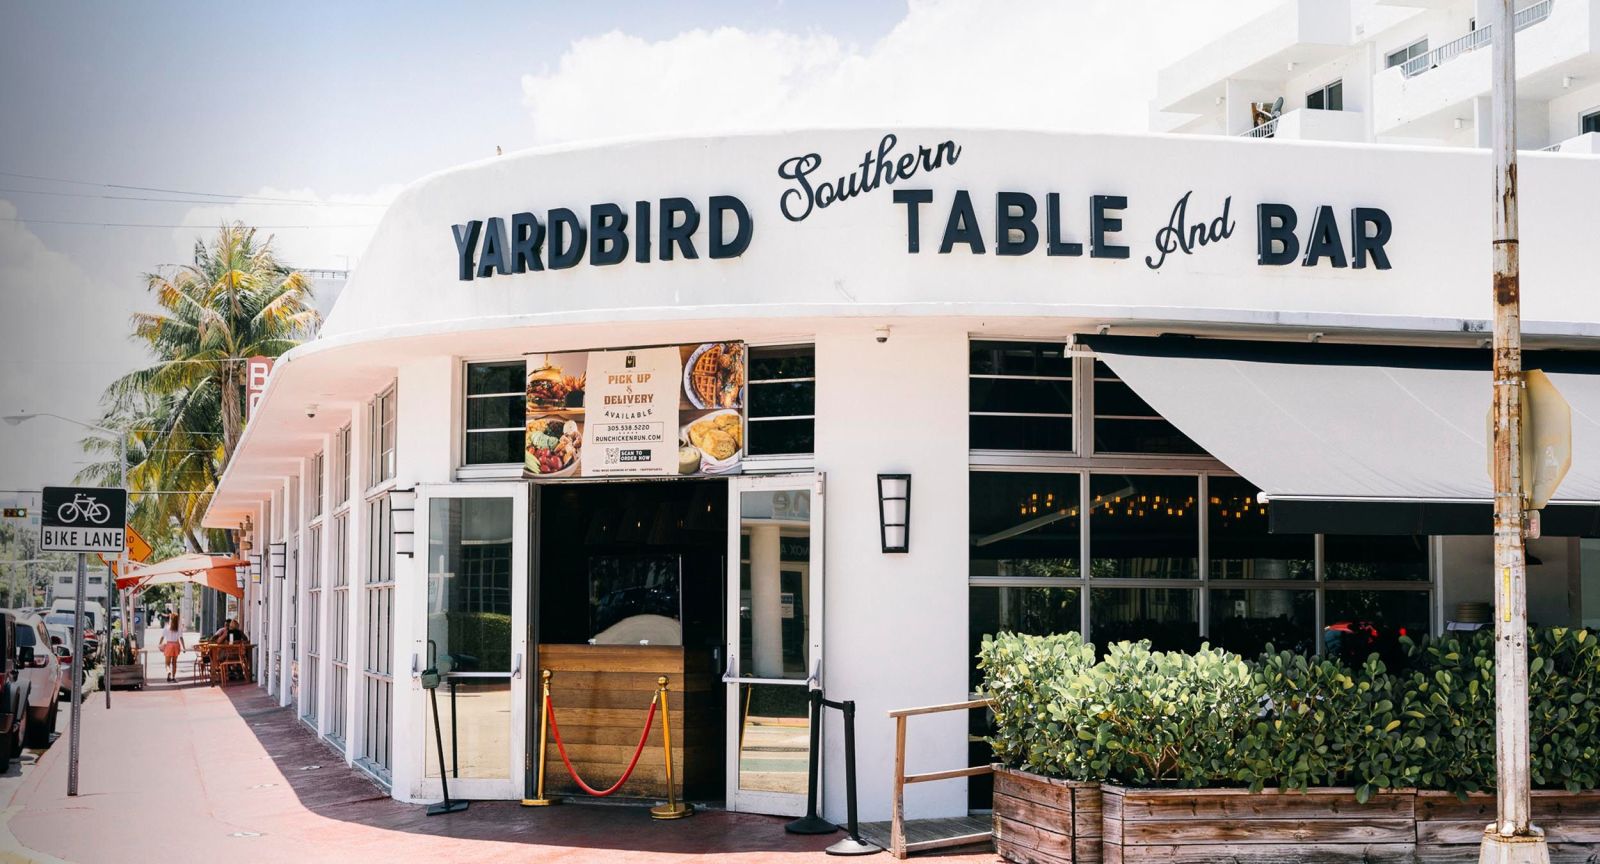 Yardbird Southern Table